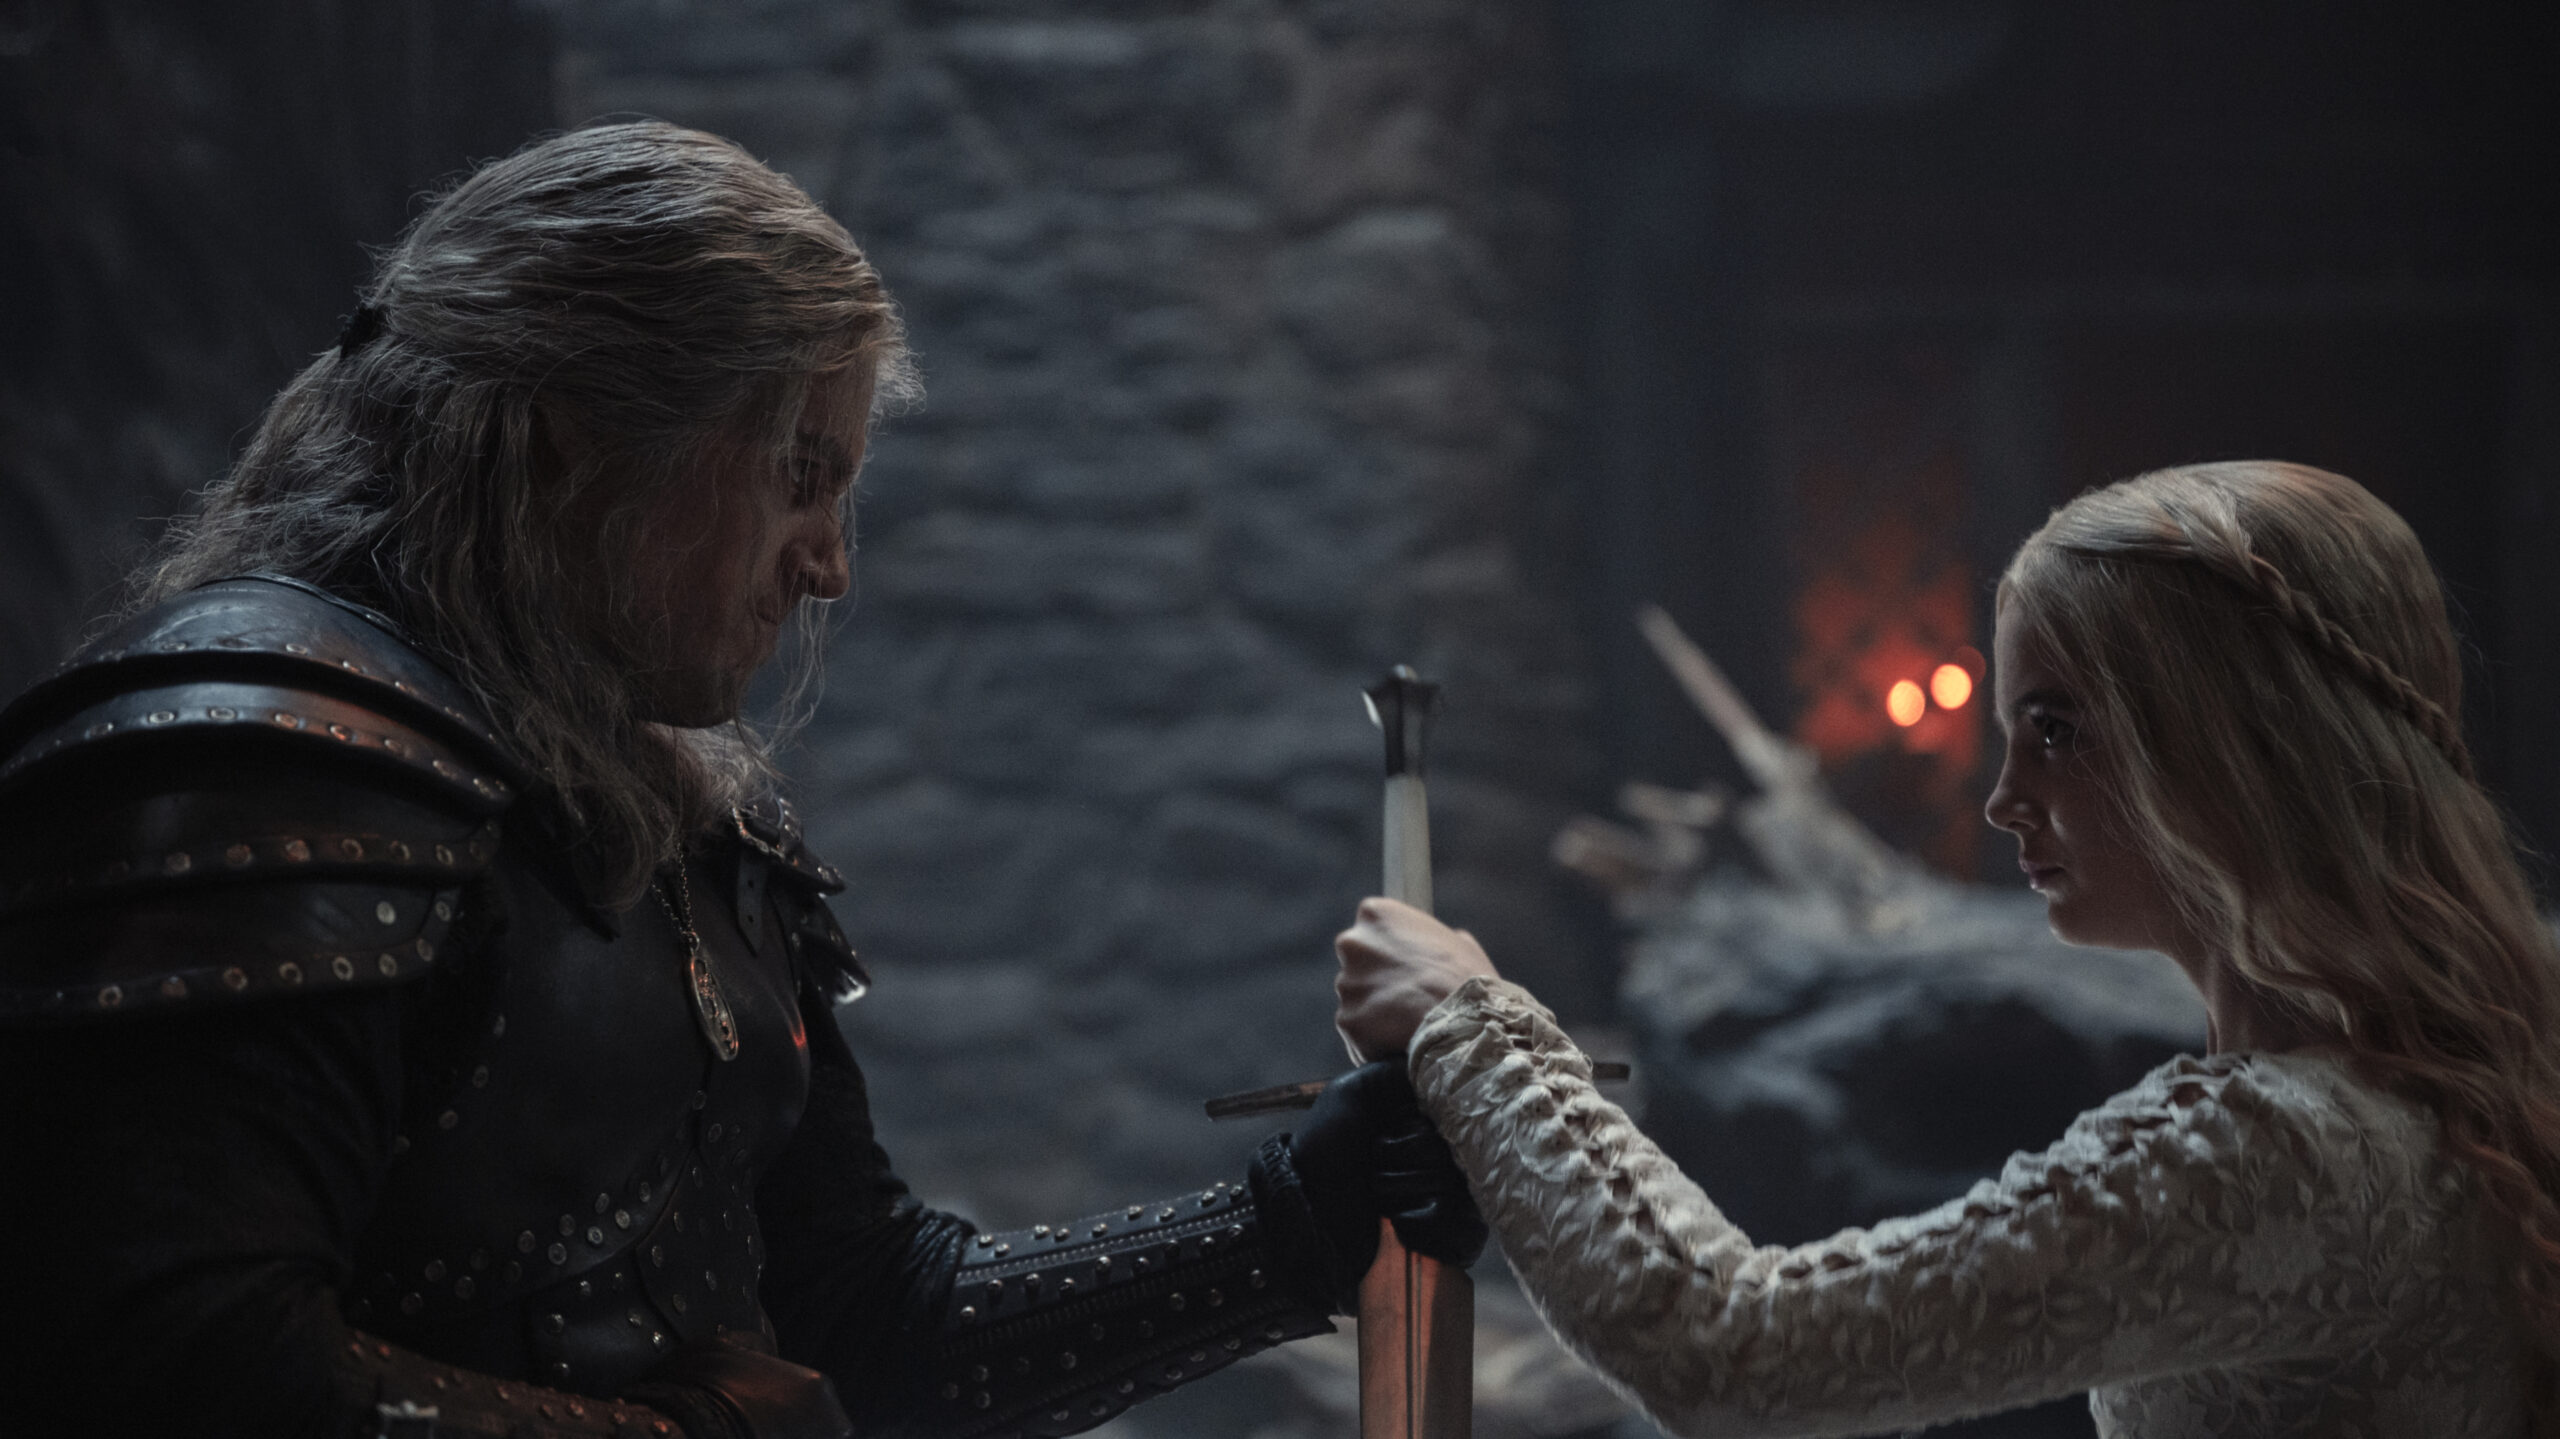 Geralt (Henry Cavill) meets a possessed Ciri (Freya Allan) in battle in The Witcher Season 2 Episode 8 "Family" (2021) via Netflix